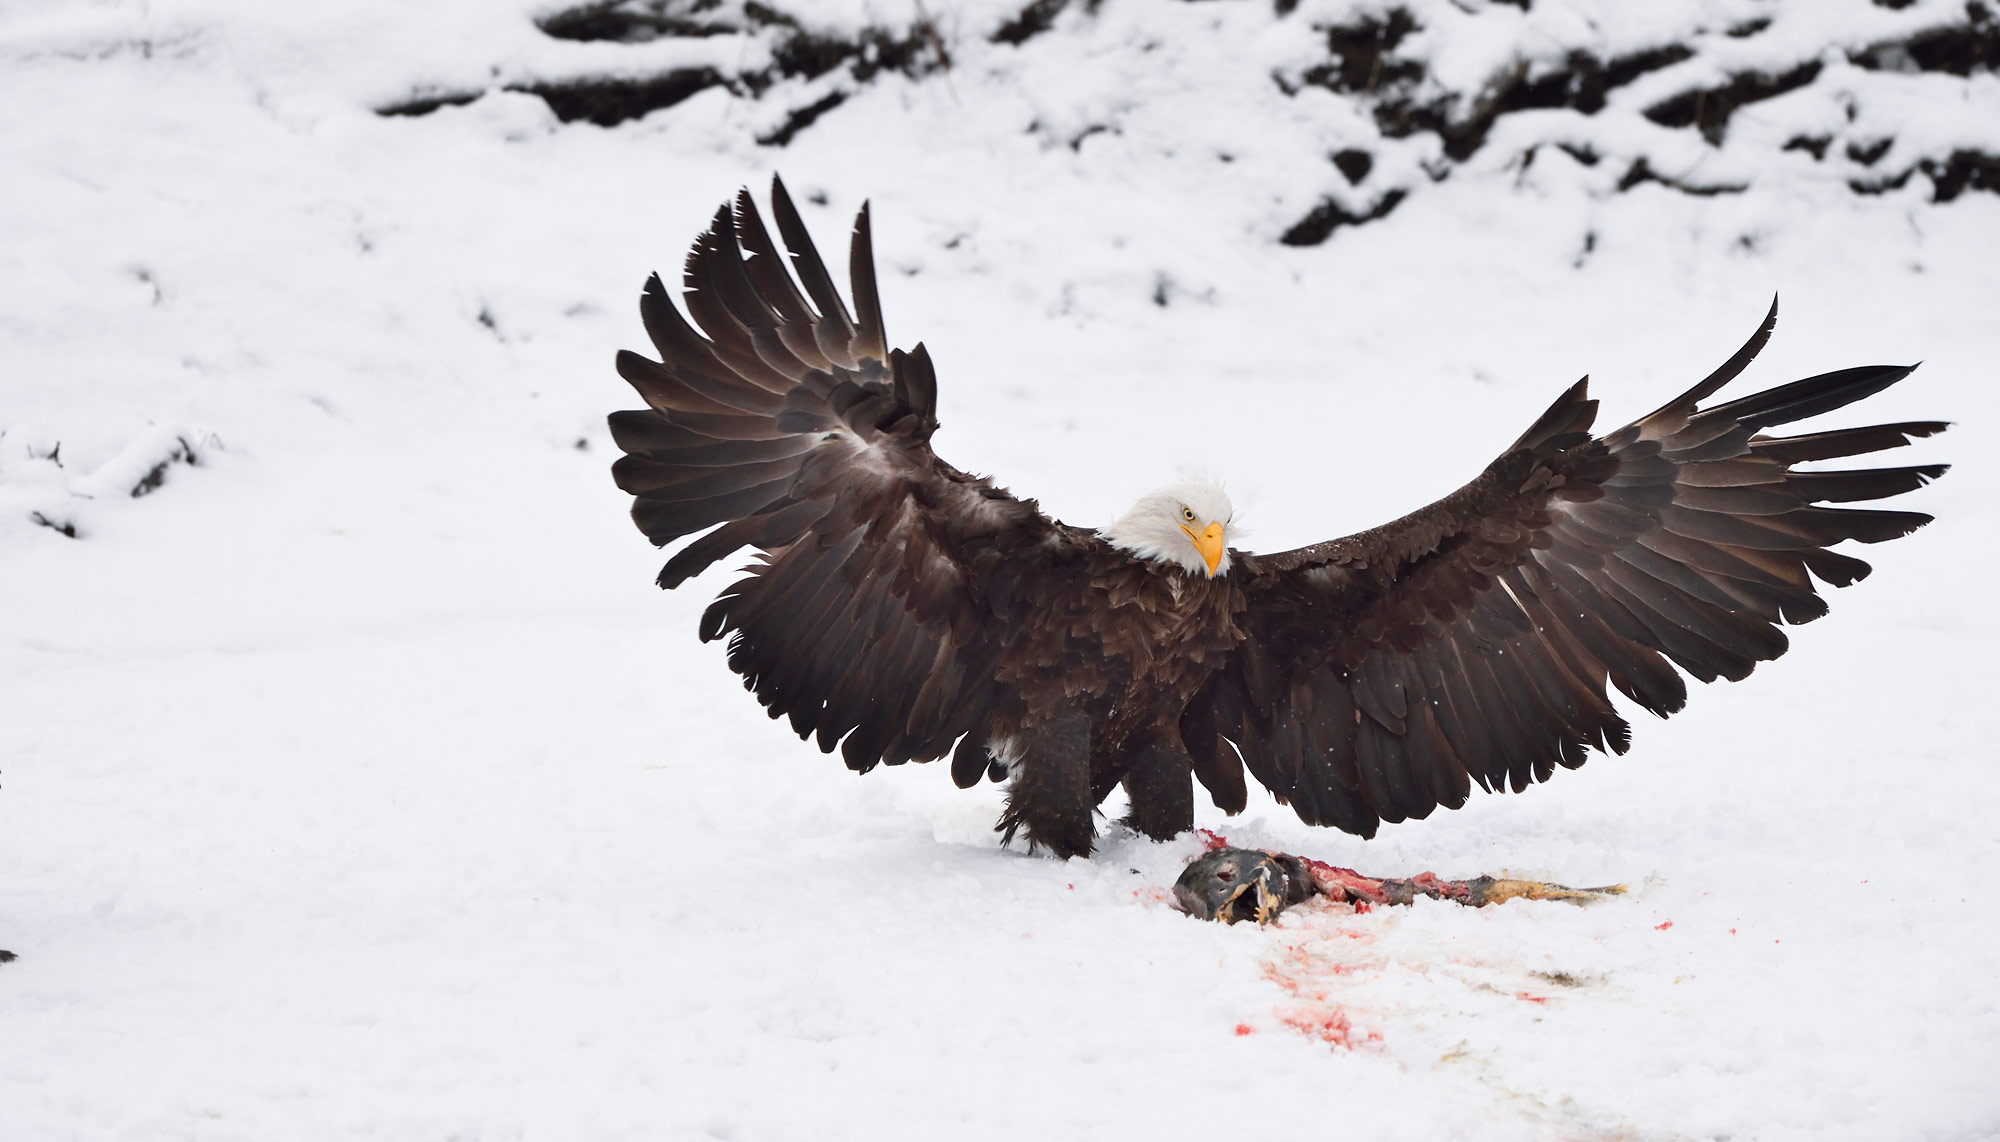 Bald eagle photography workshop Bald eagle landing near a salmon, Chilkat River, Alaska.